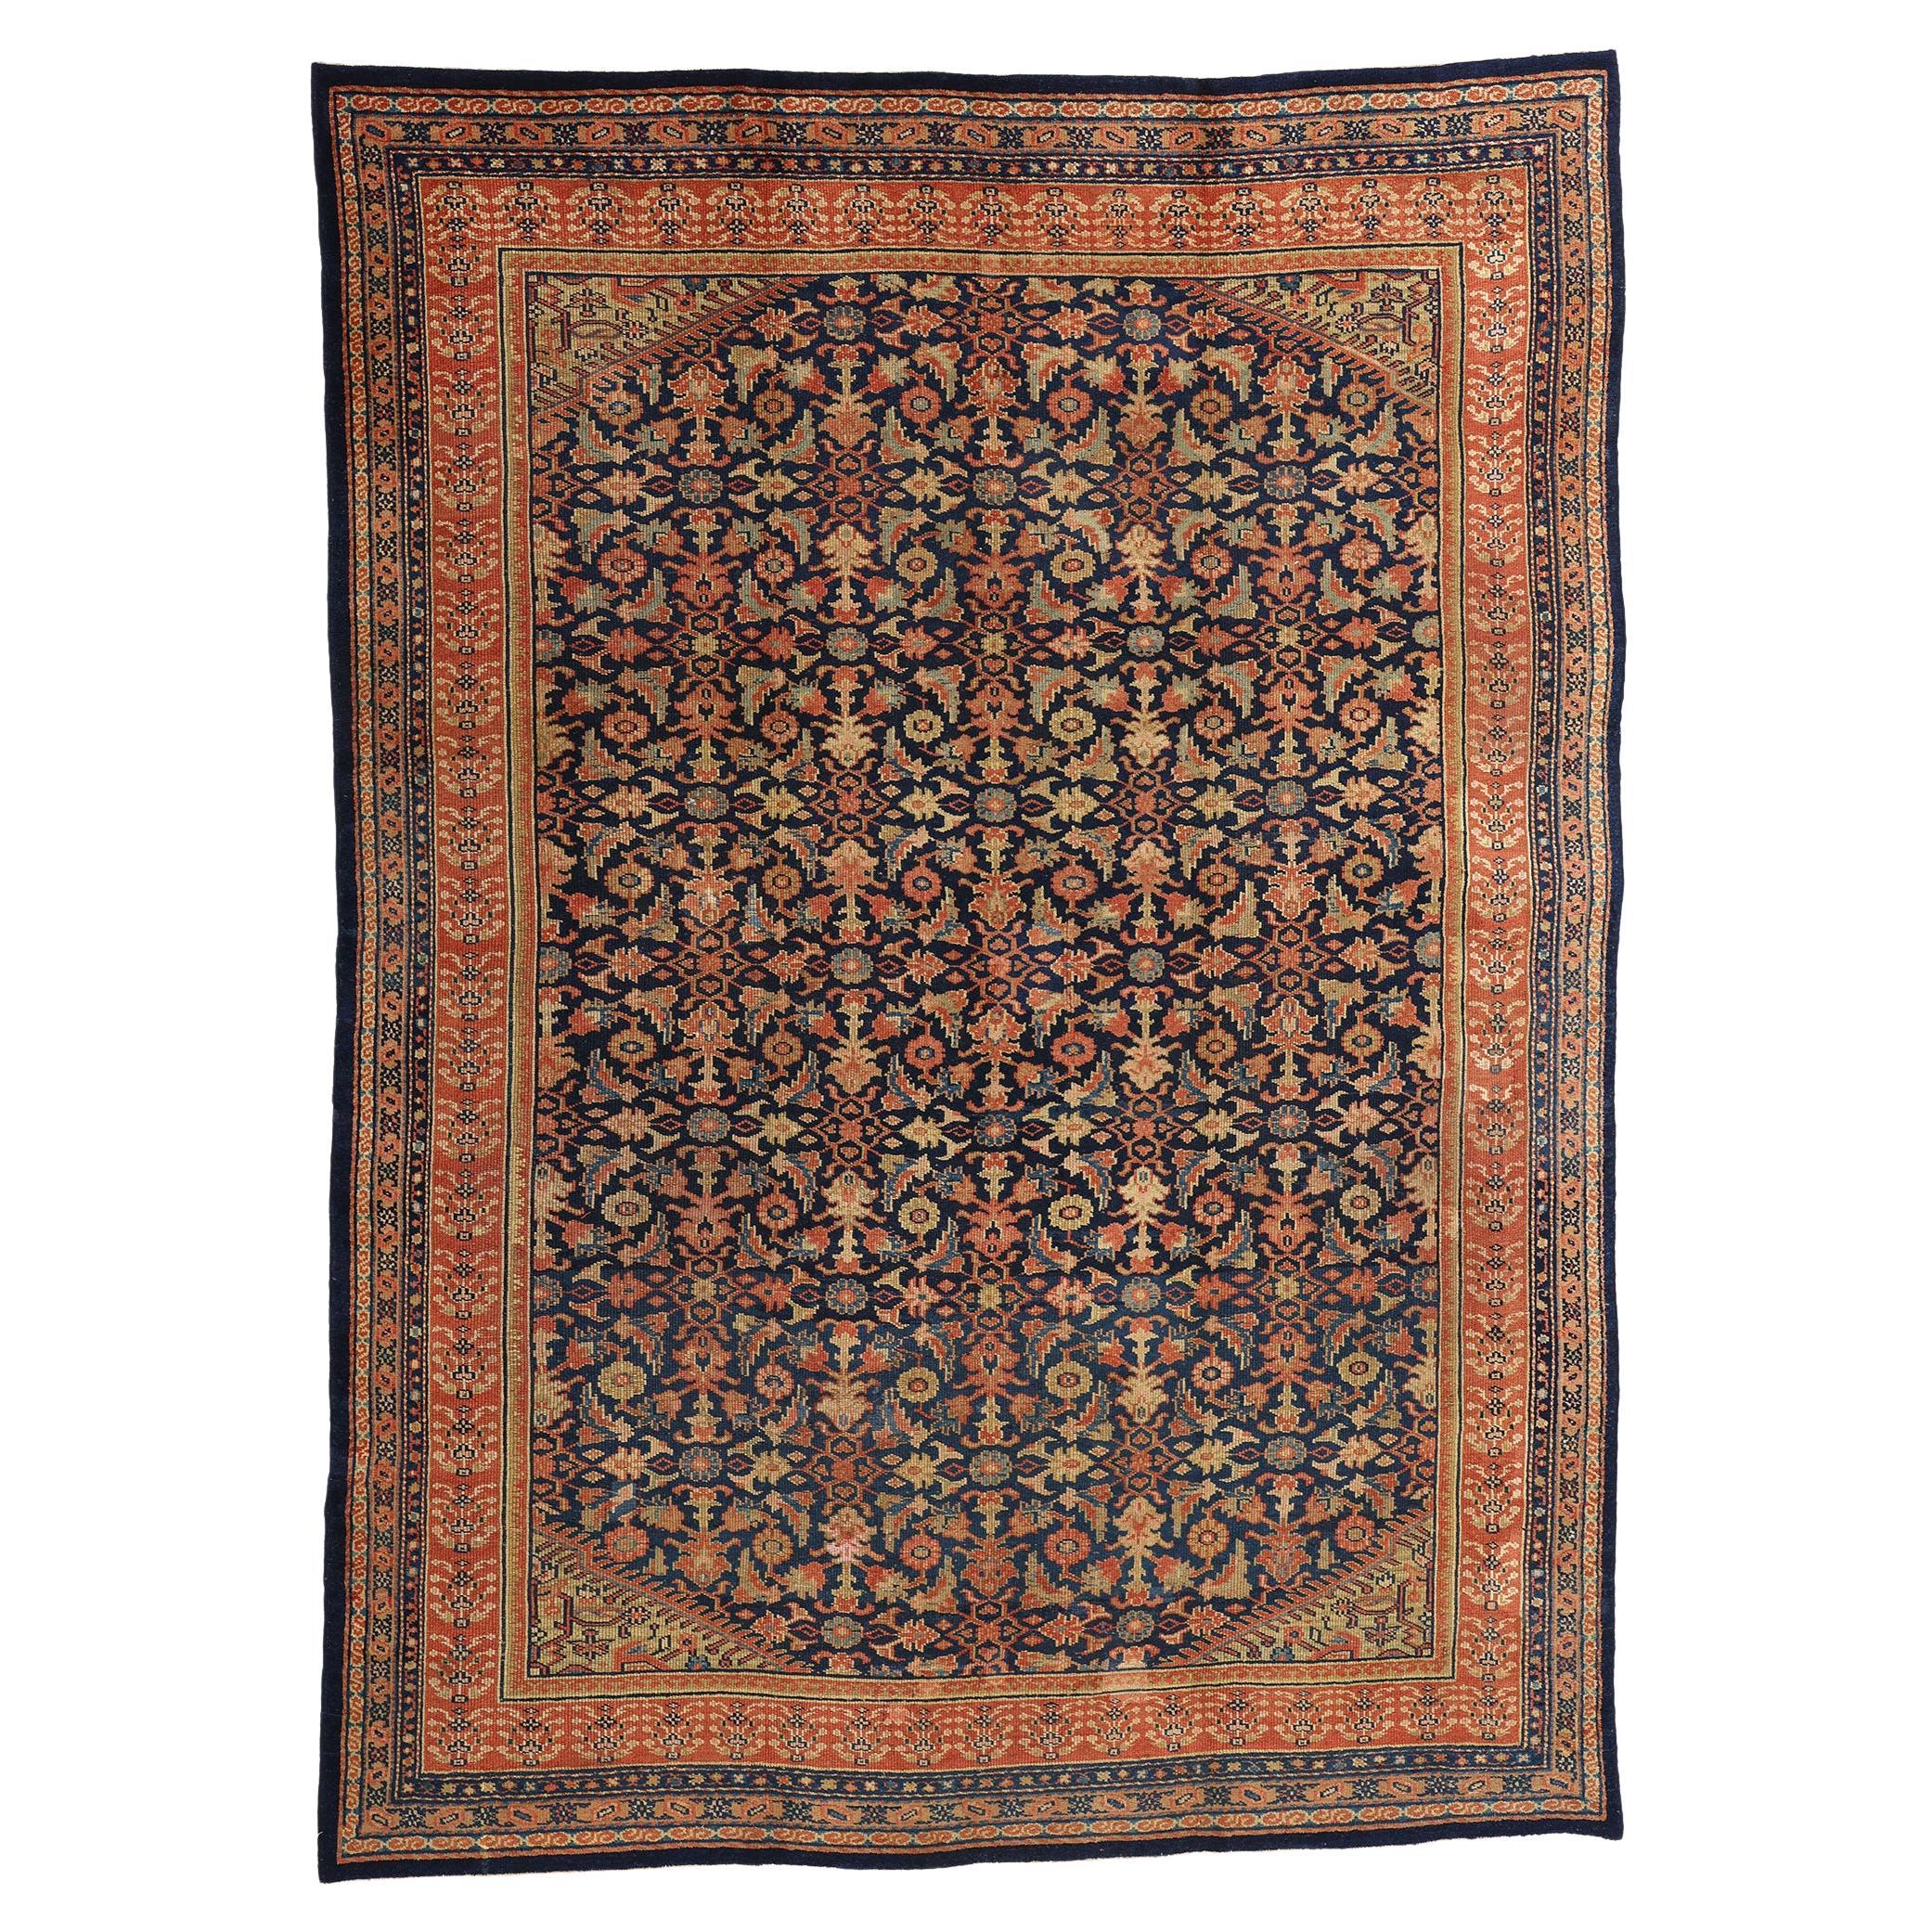 Late 19th Century Distressed Antique Navy Blue Persian Kurdish Carpet